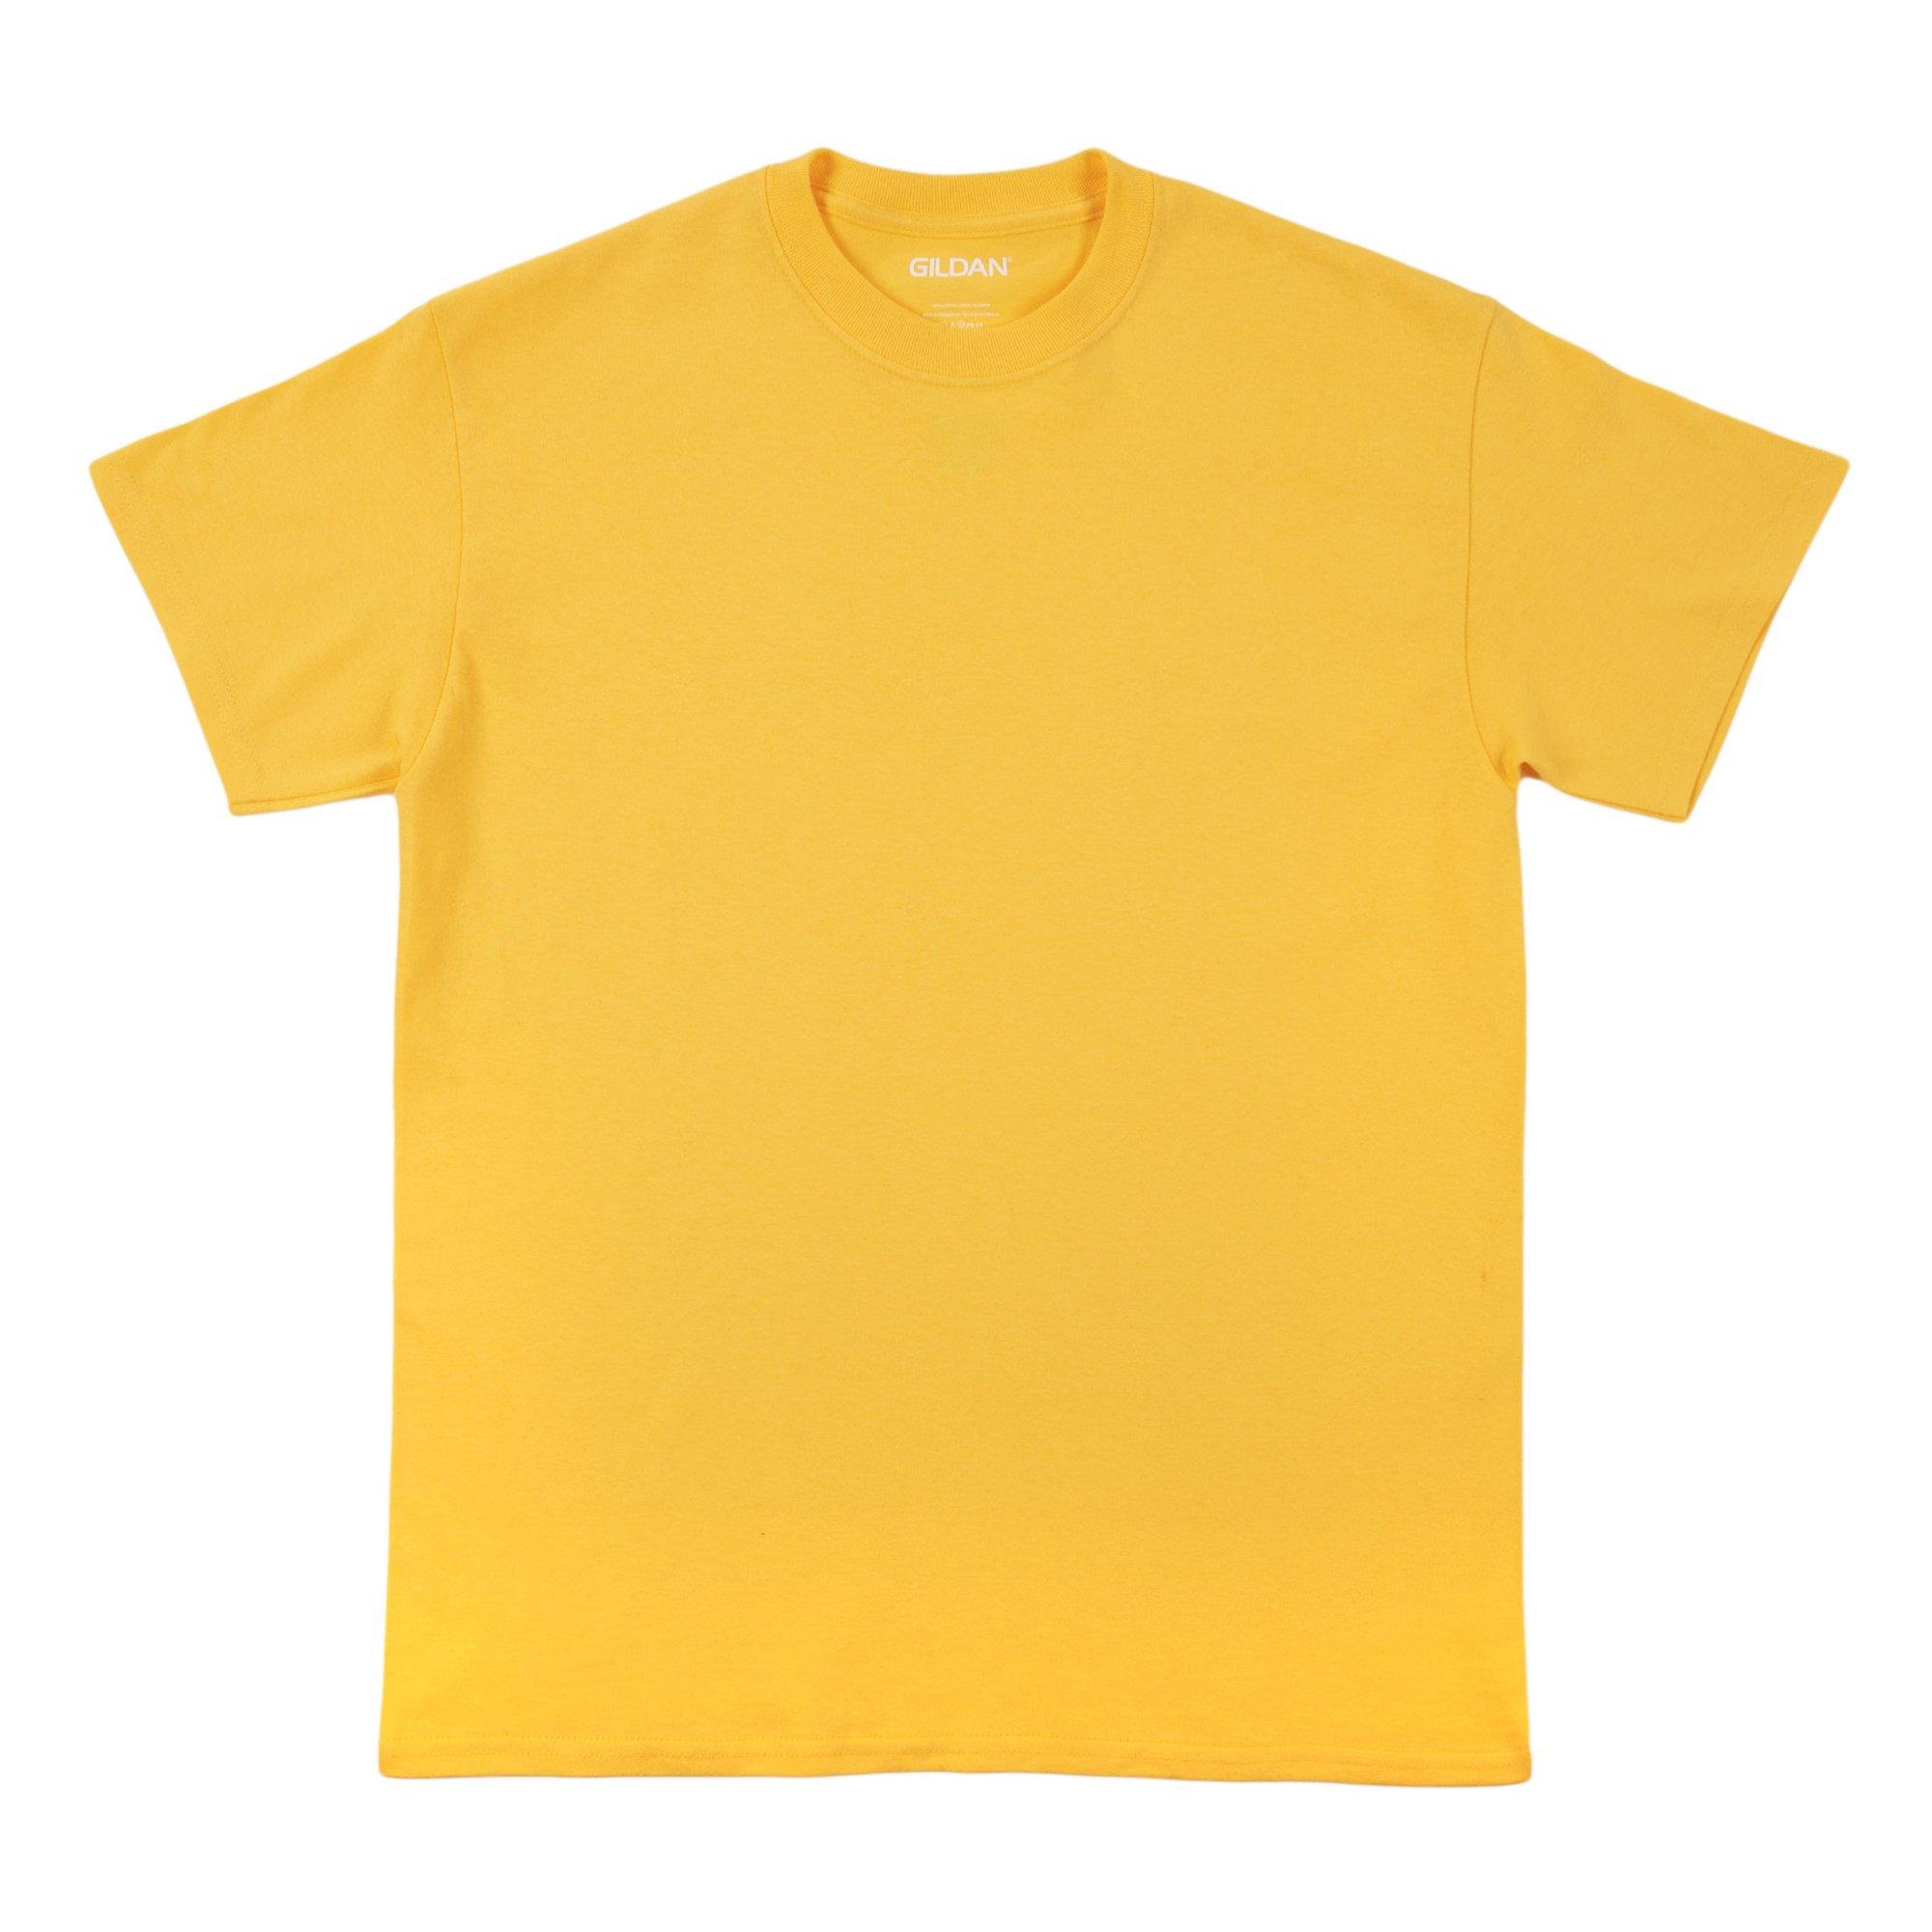 Gildan Mens Short Sleeve Crew Black T-Shirt Up to 2XL, 6-Pack, Men's, Size: Small